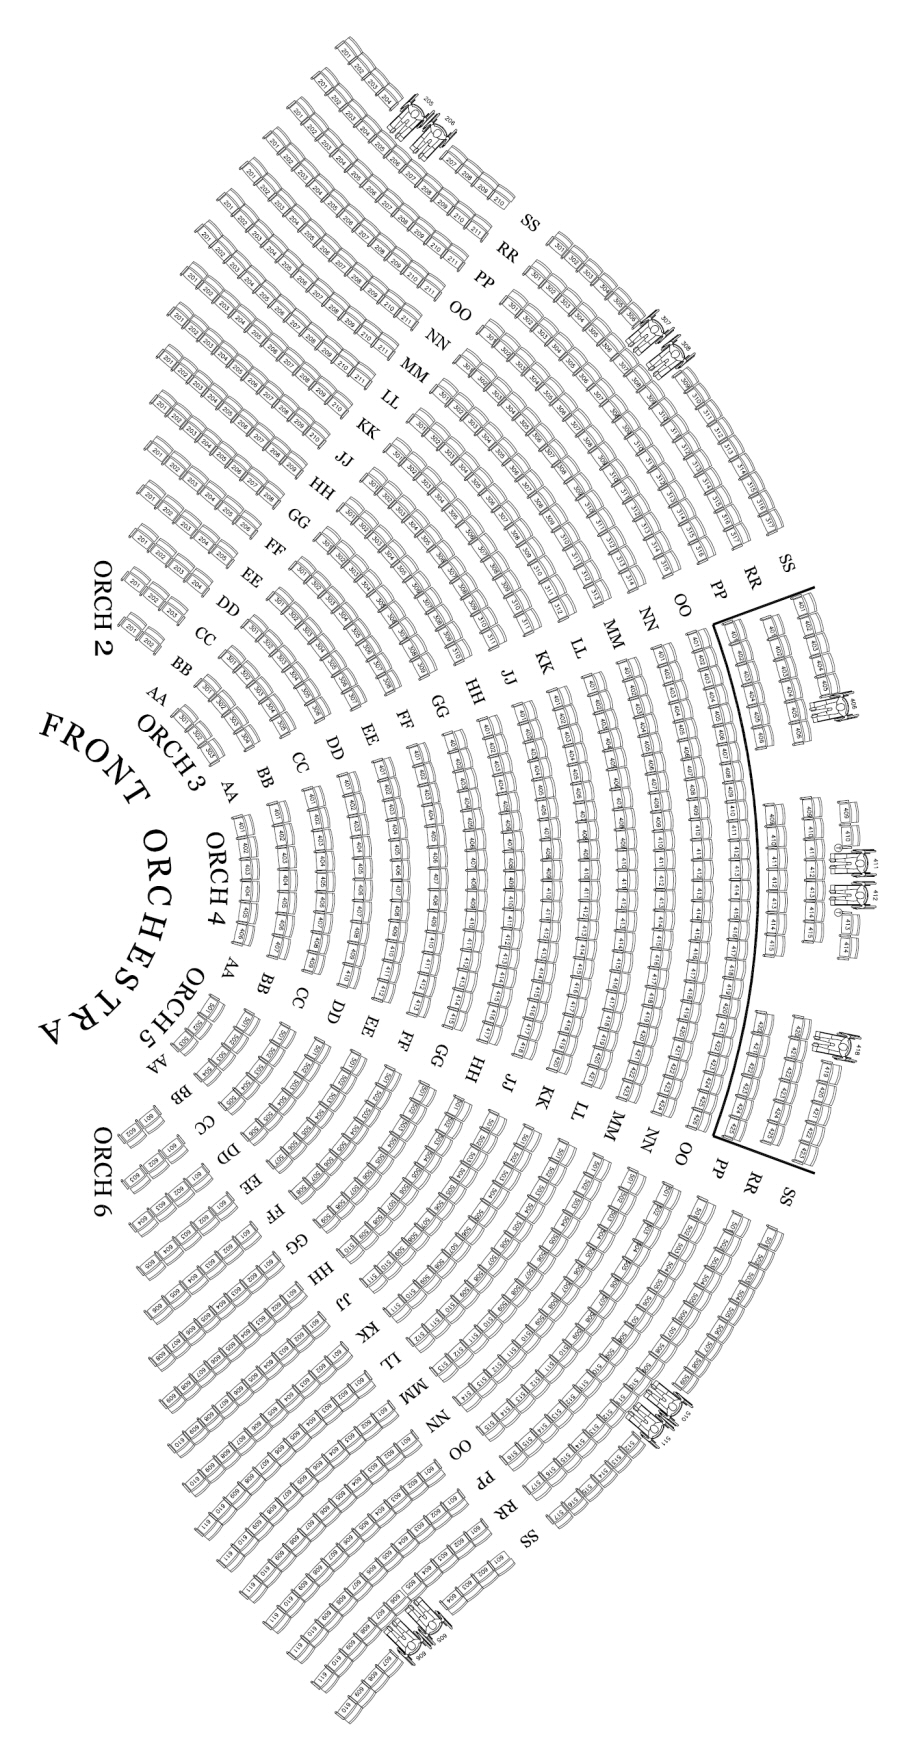 The Colosseum At Caesars Palace Las Vegas Nv Seating Chart